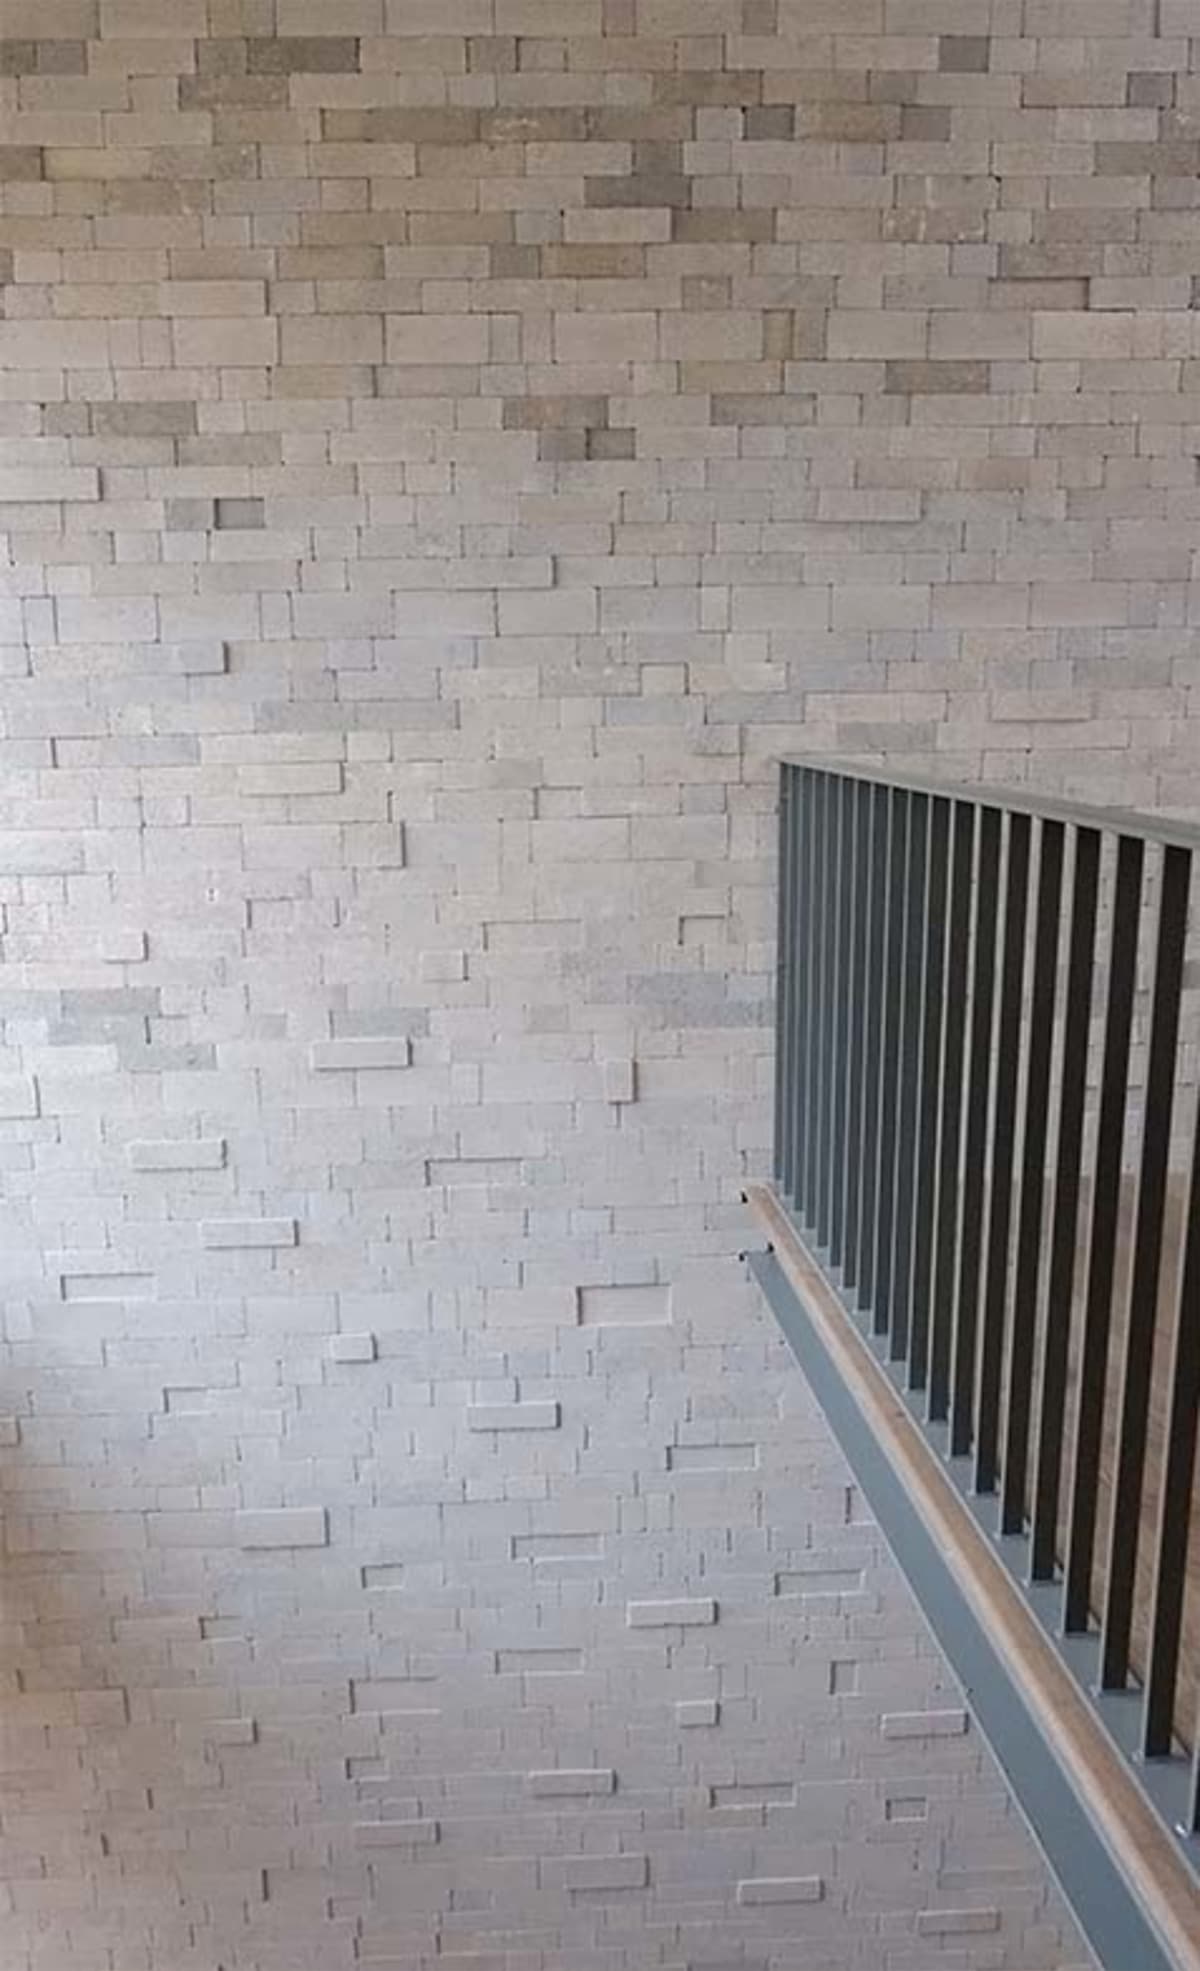 Internal brick wall with overlooking balcony